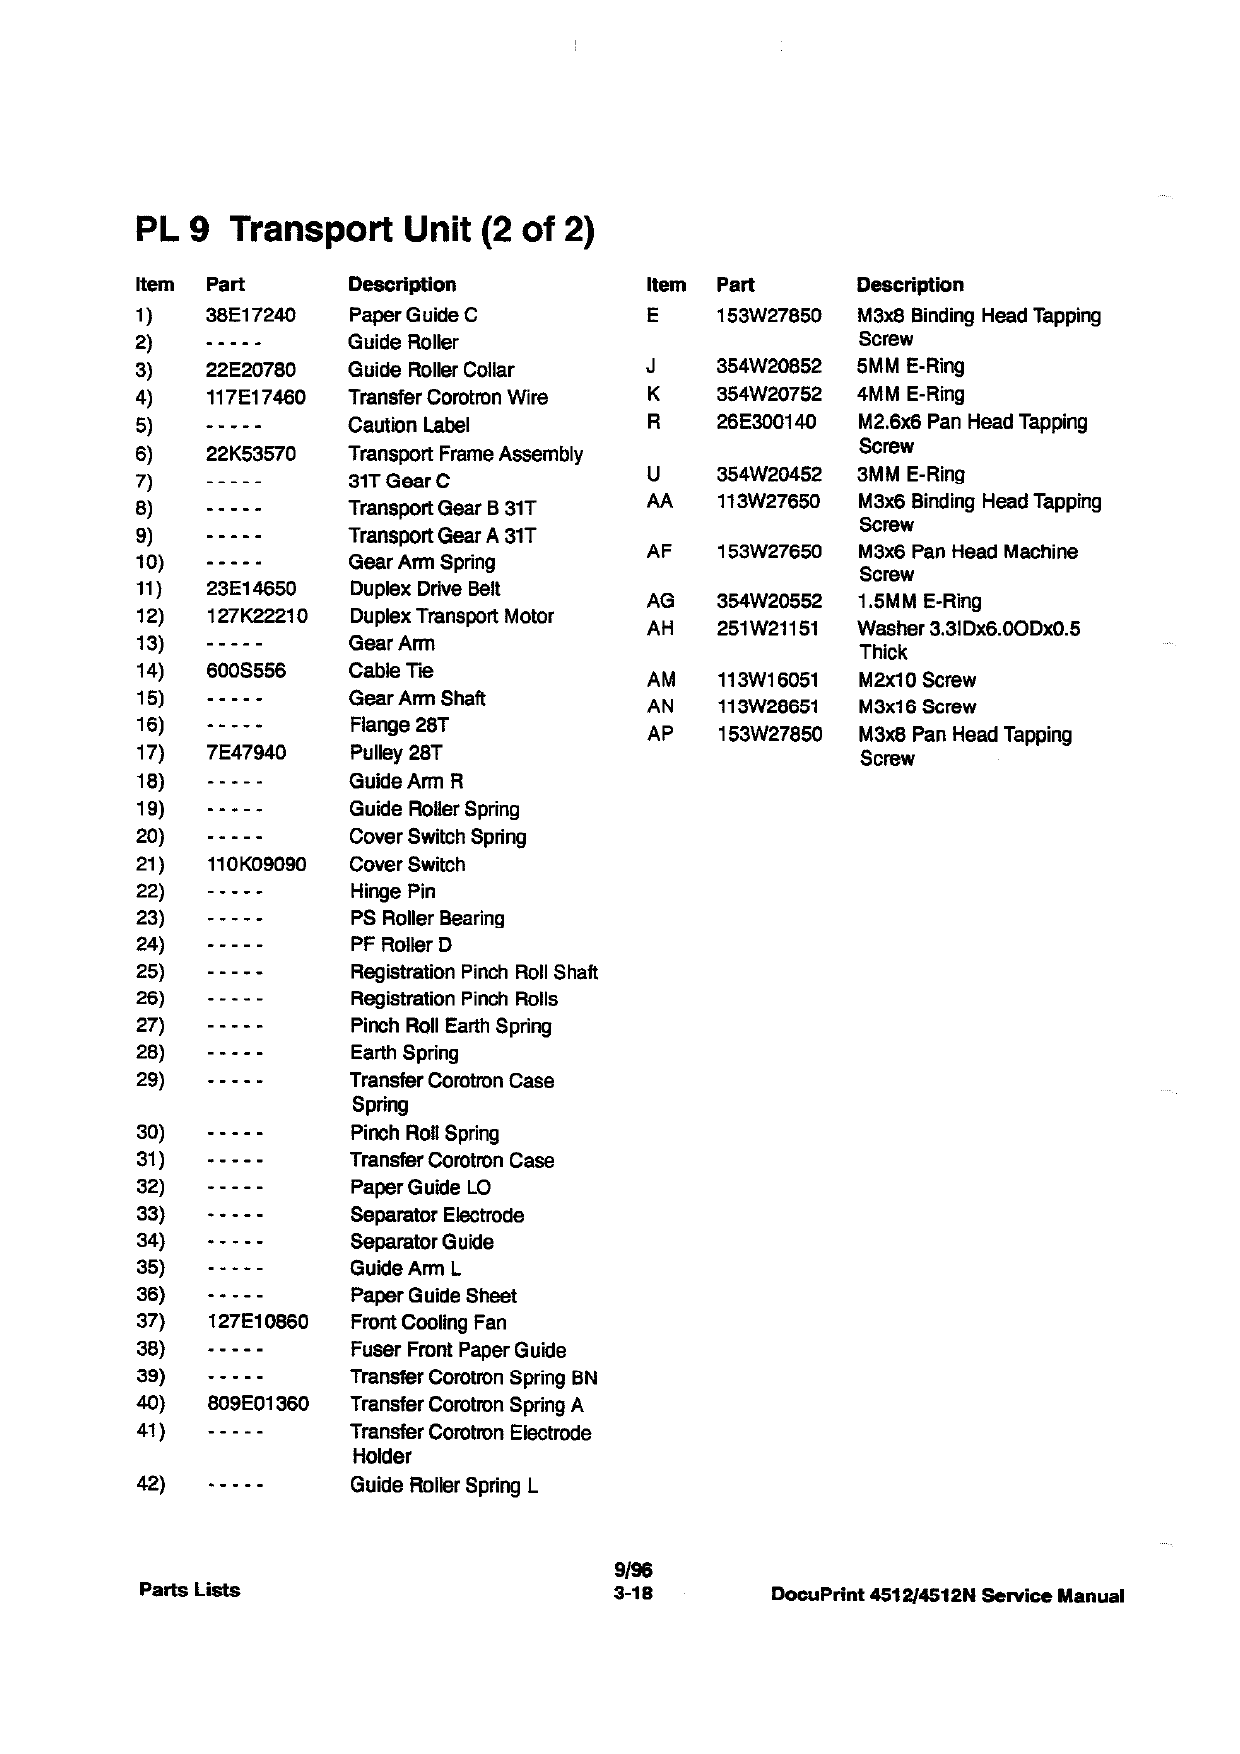 Xerox DocuPrint 4512 Parts List and Service Manual-6